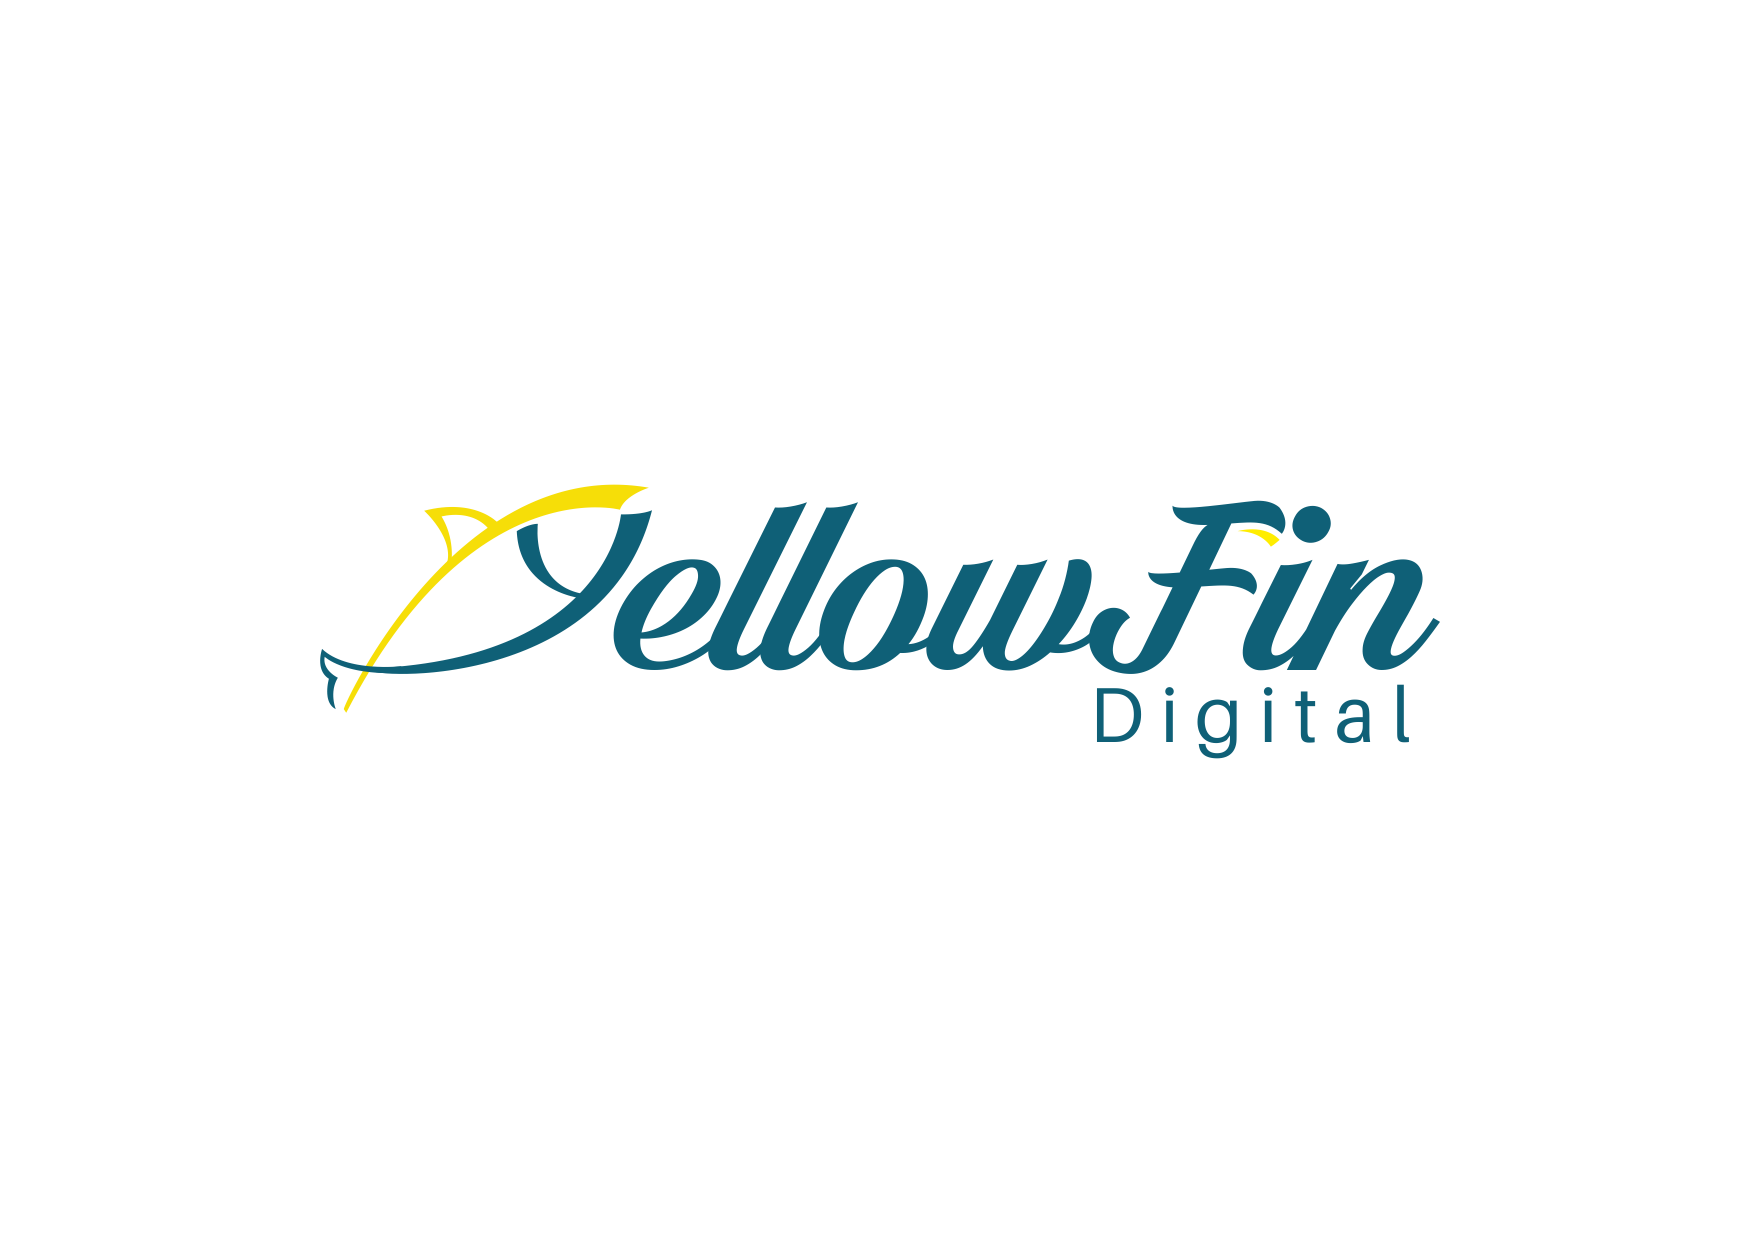 Best Online Marketing Company Logo: YellowFin Digital